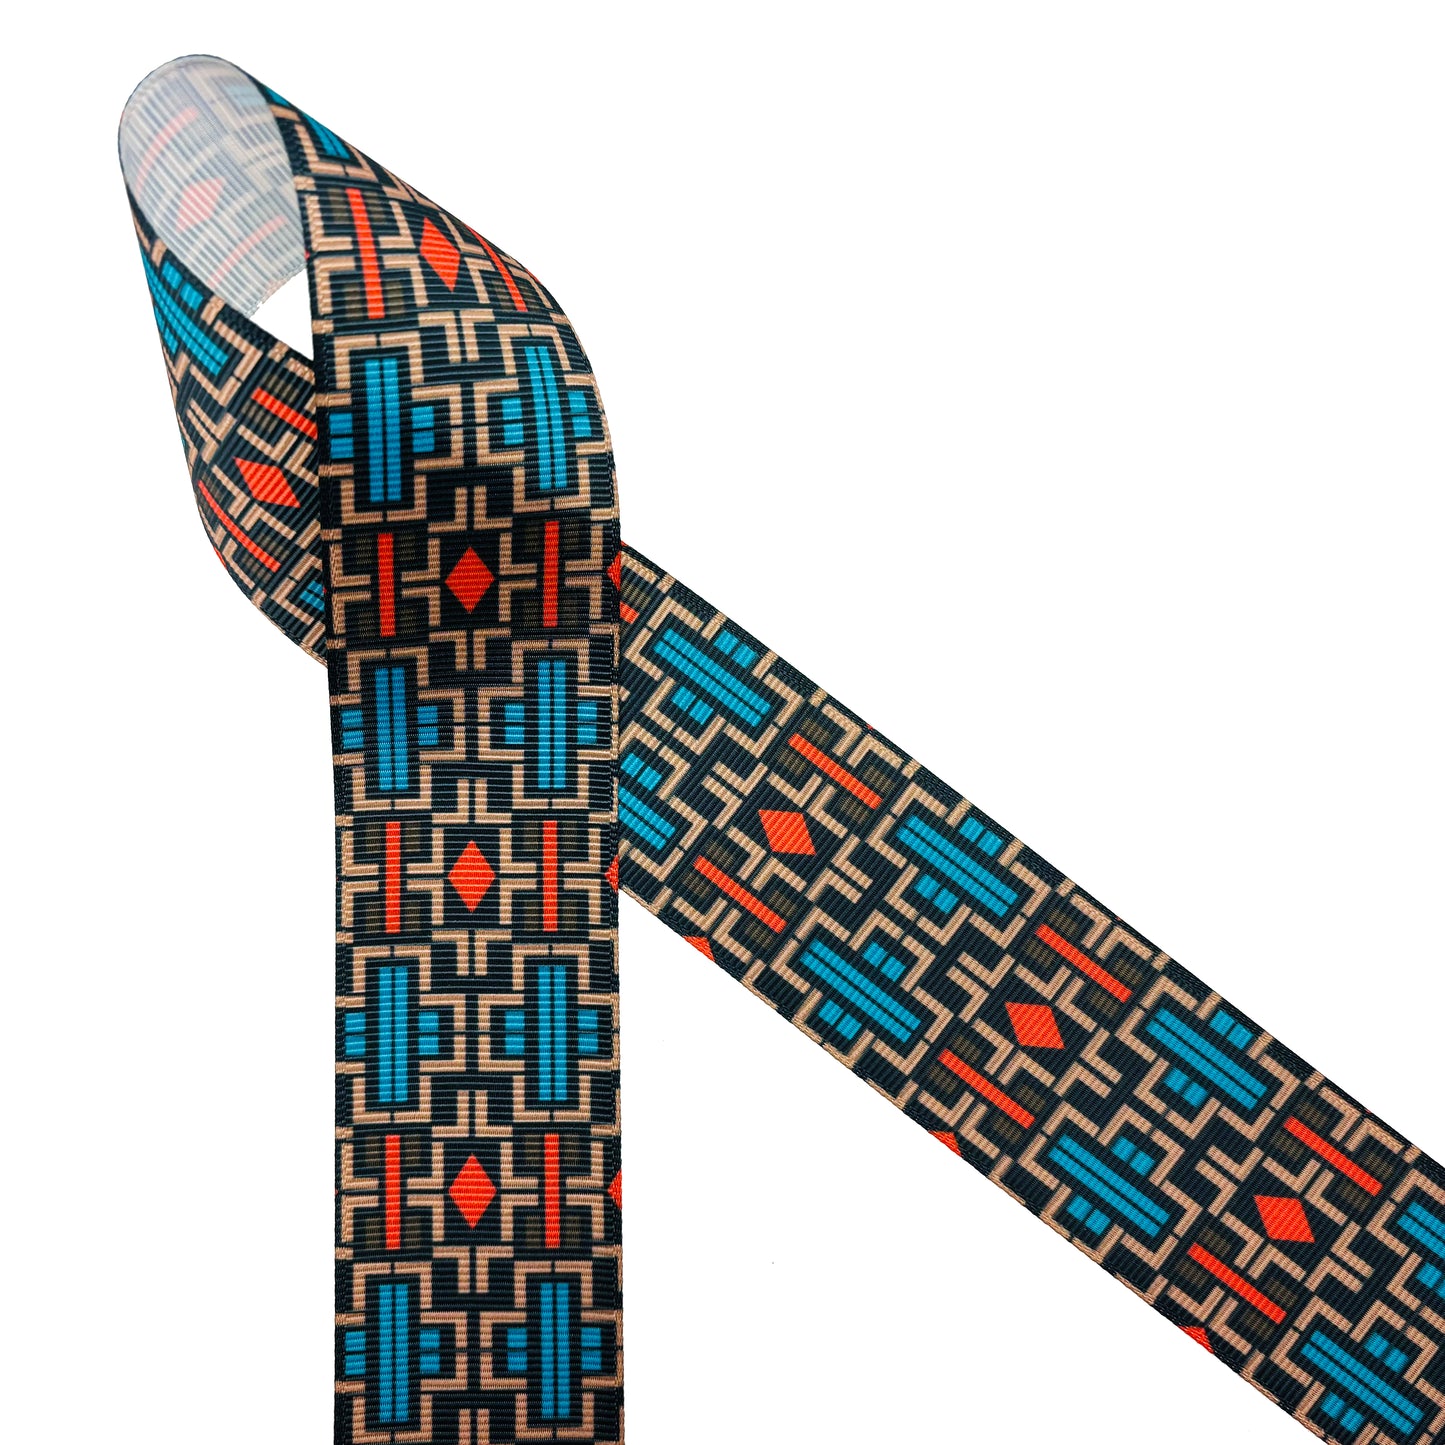 Aztec Design ribbon printed in three color ways of orange, black and cream printed on 1.5" white grosgrain